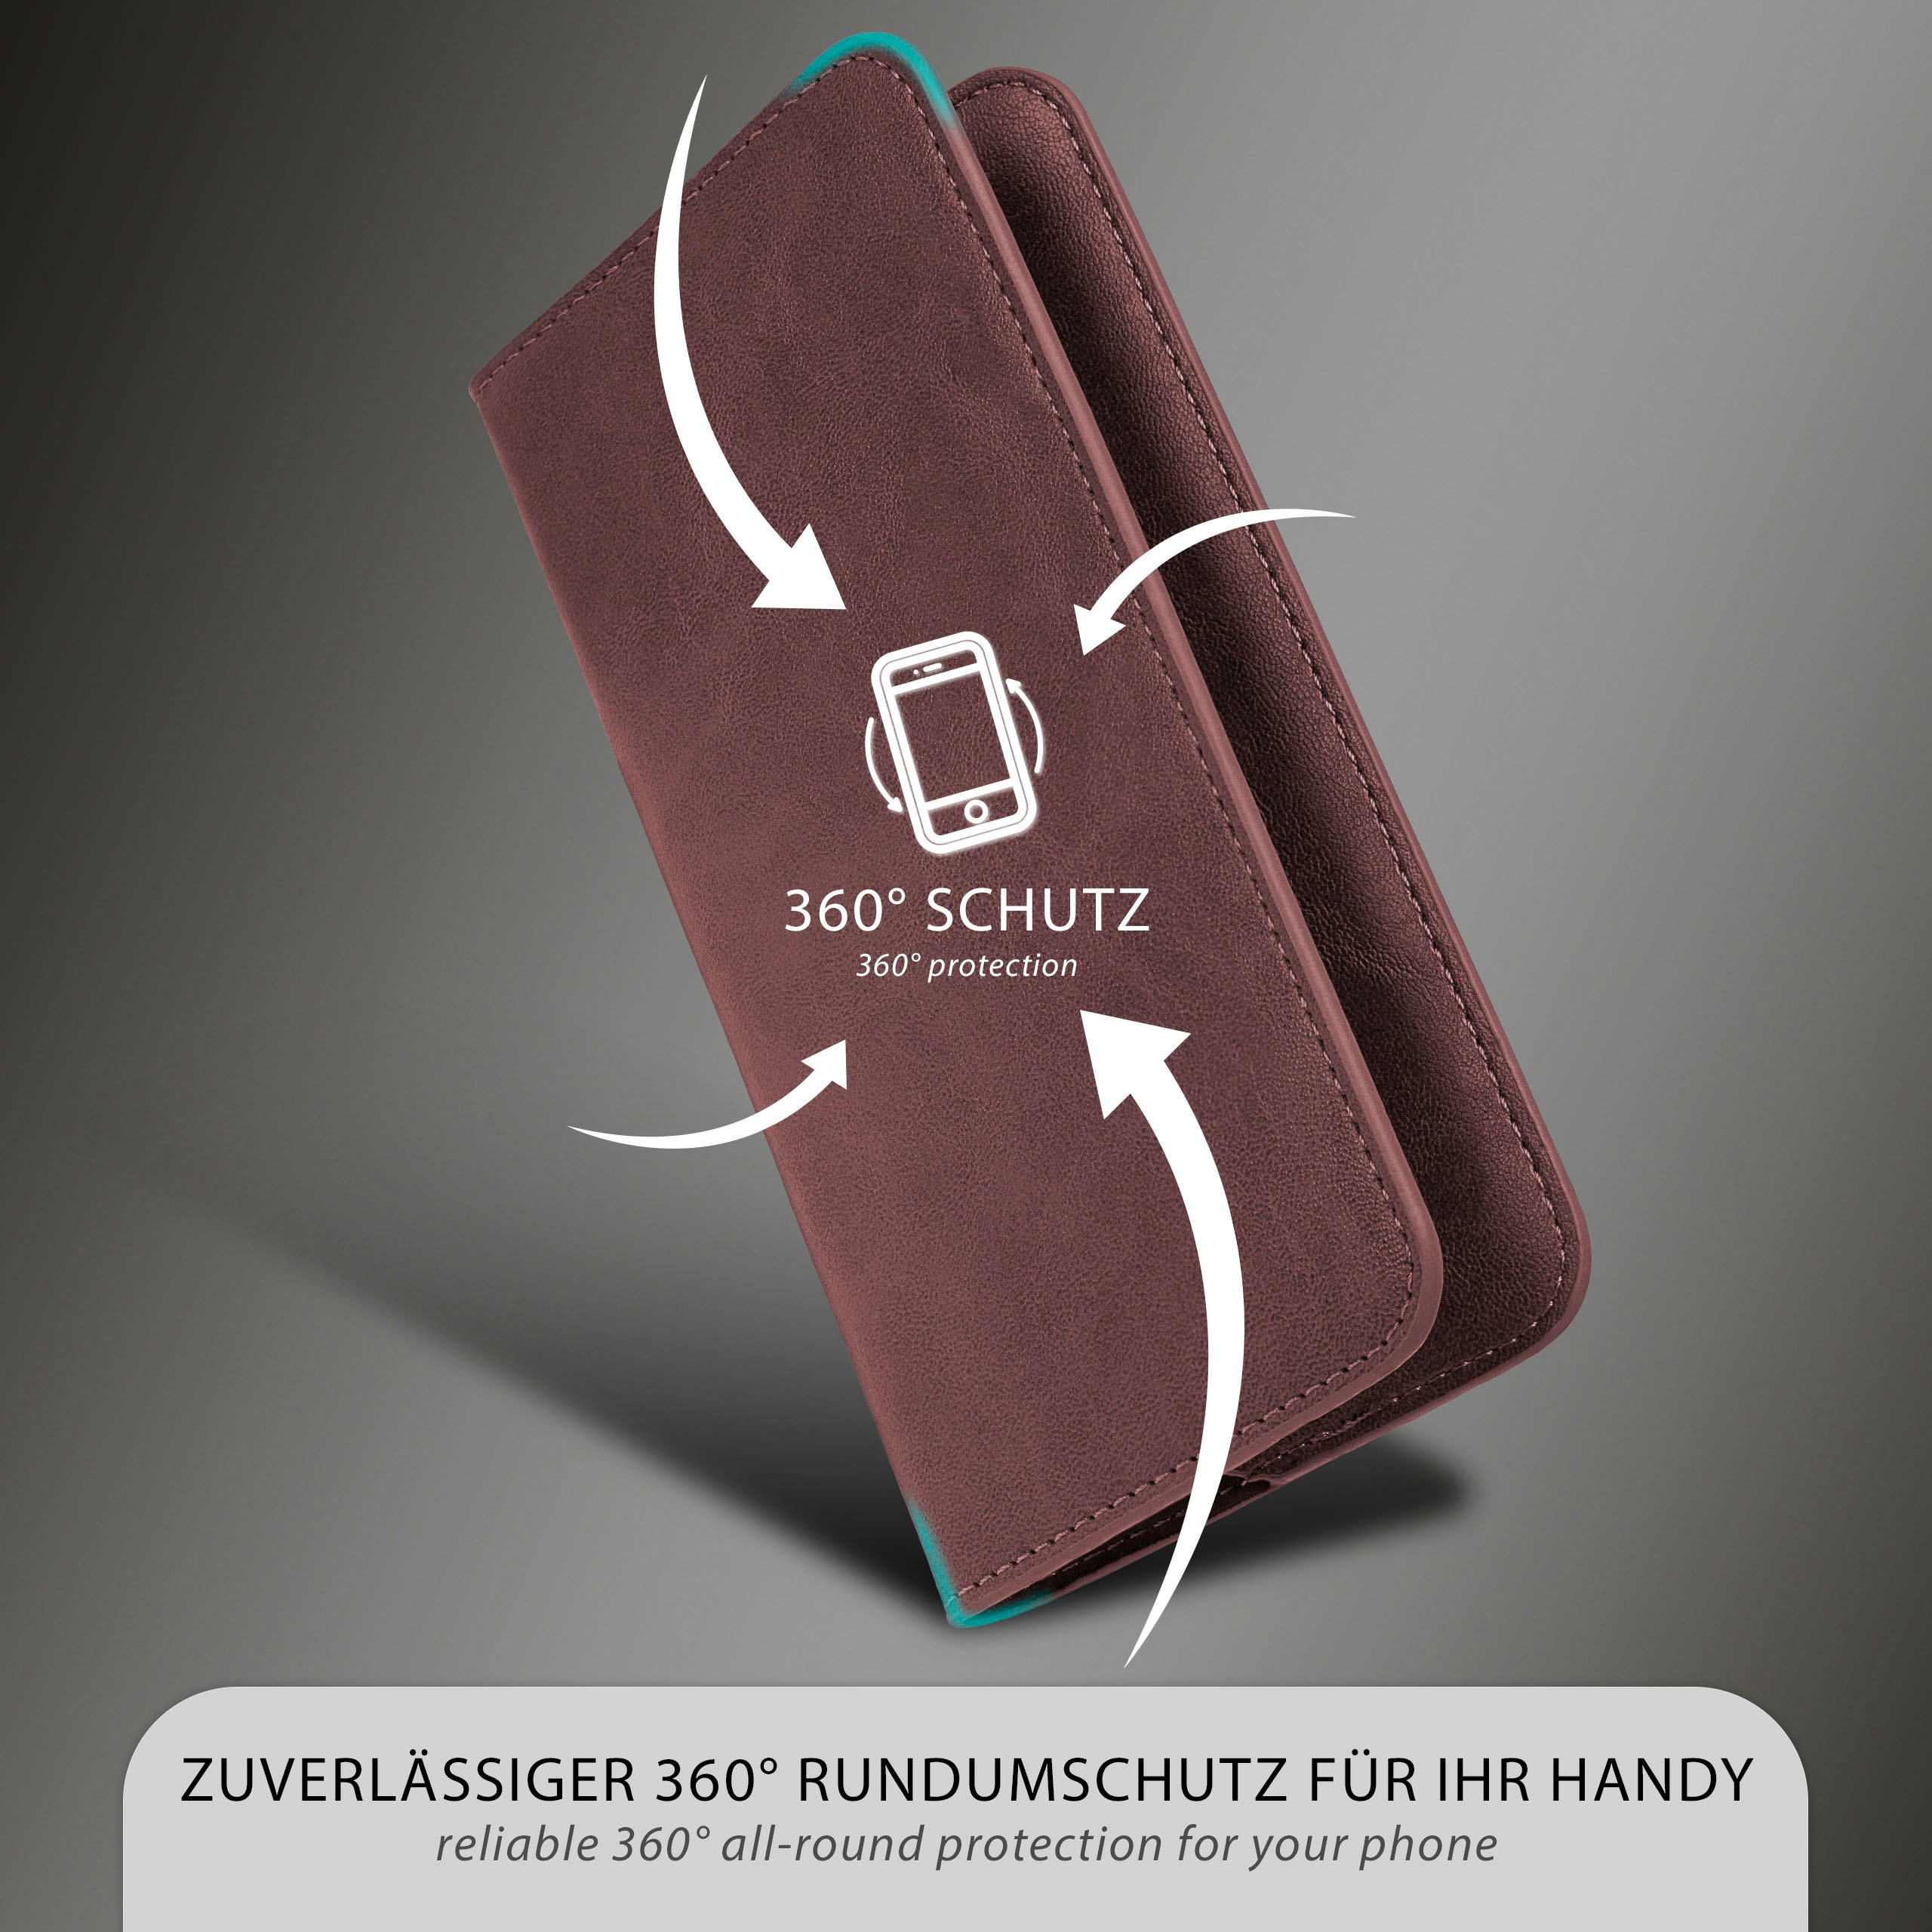 (2018), Purse Case, MOEX Samsung, Galaxy A7 Weinrot Flip Cover,